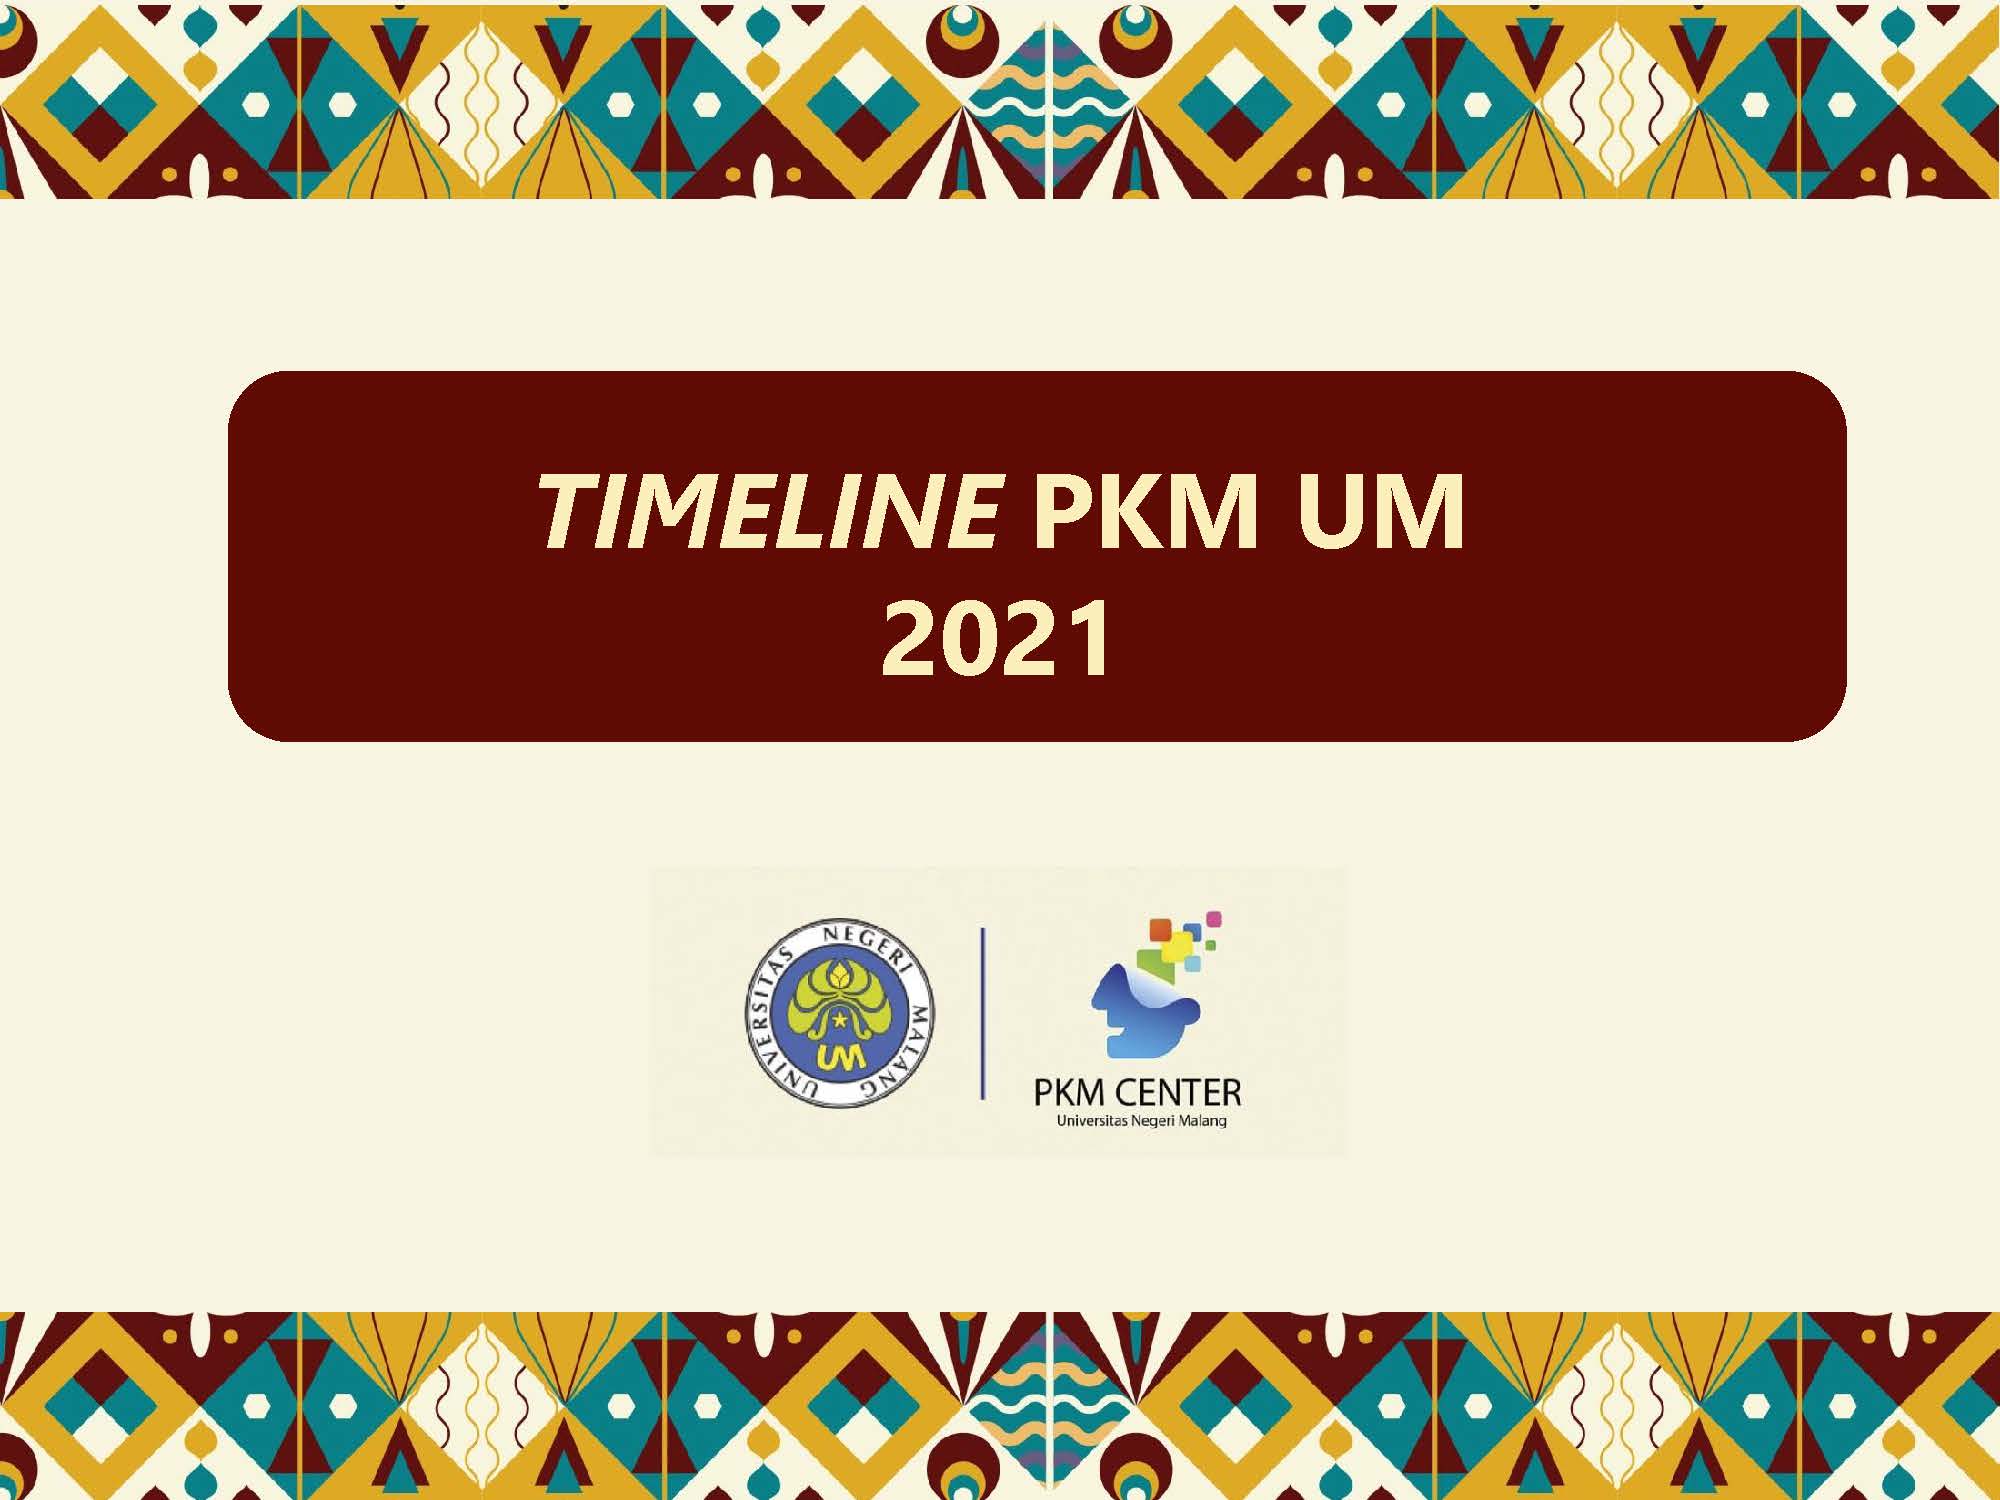 TIMELINE PKM UM 2021